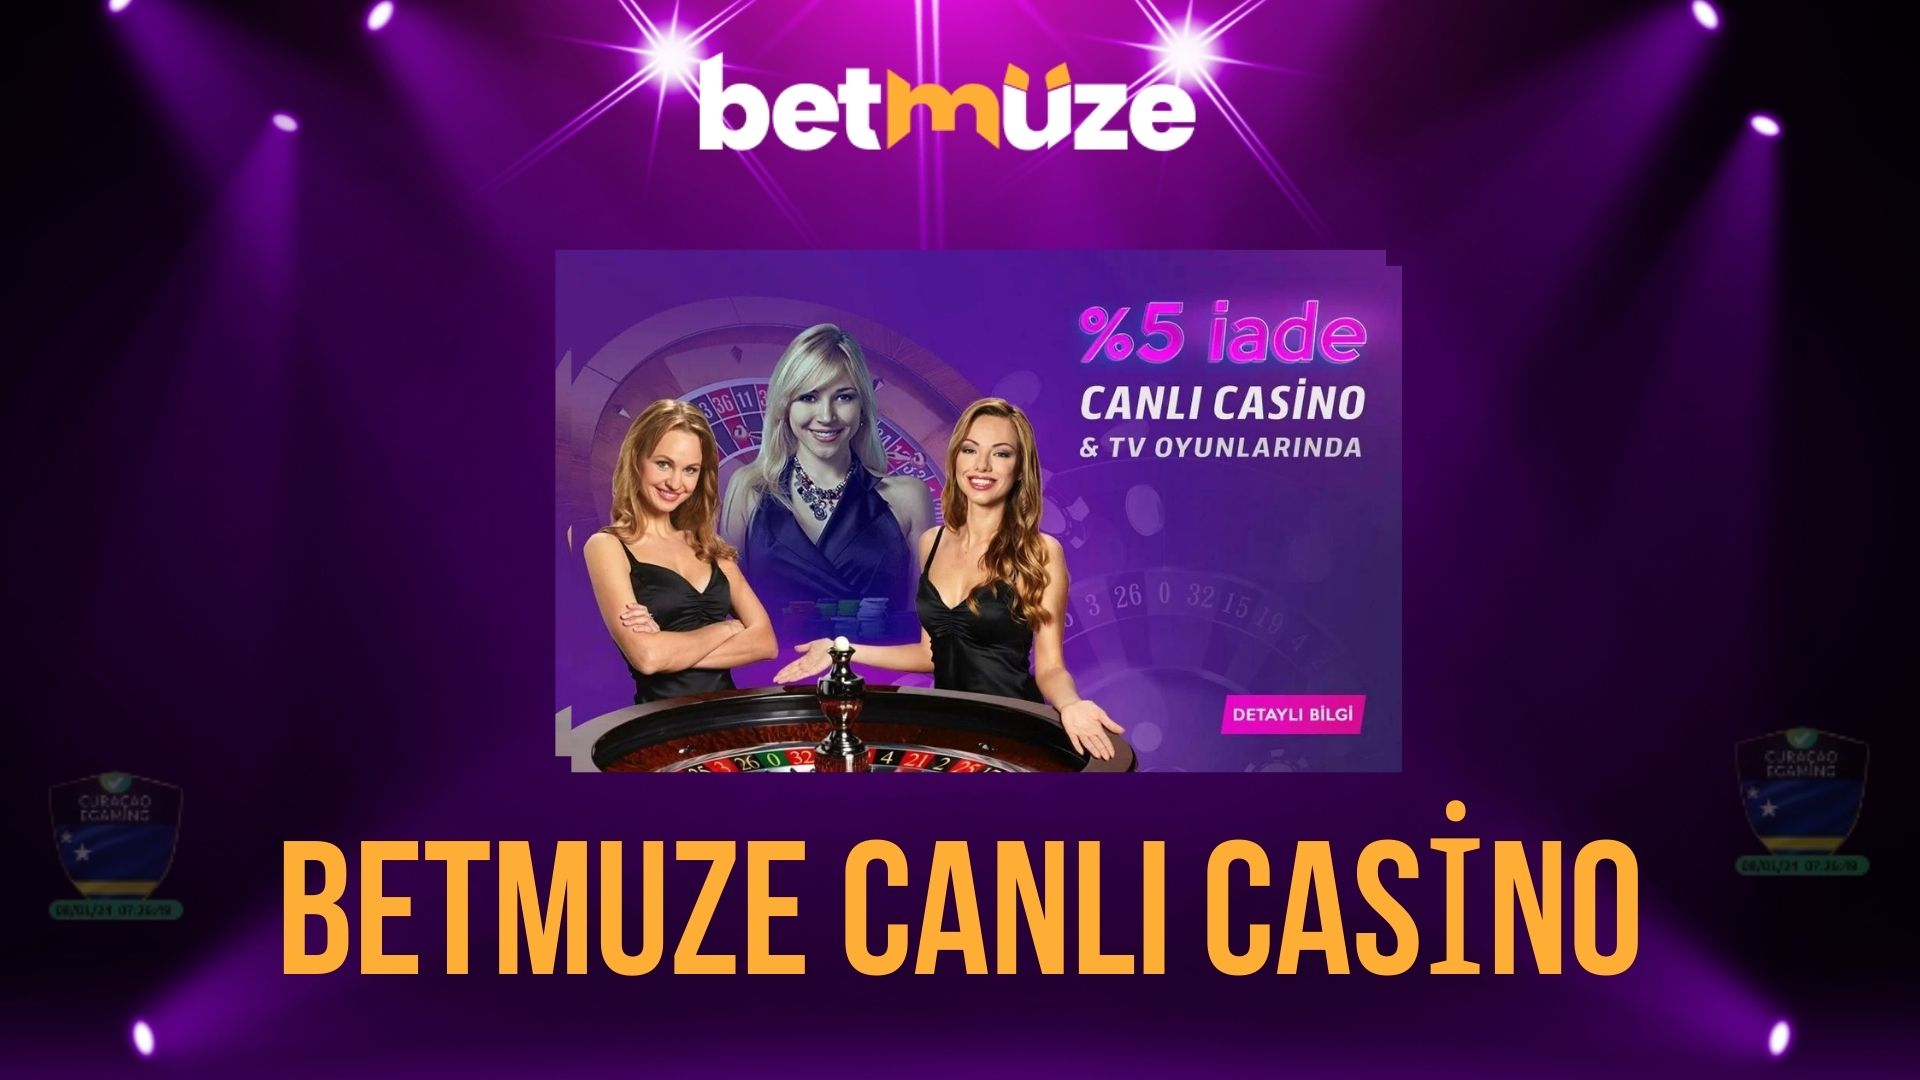 Betmuze Canlı Casino